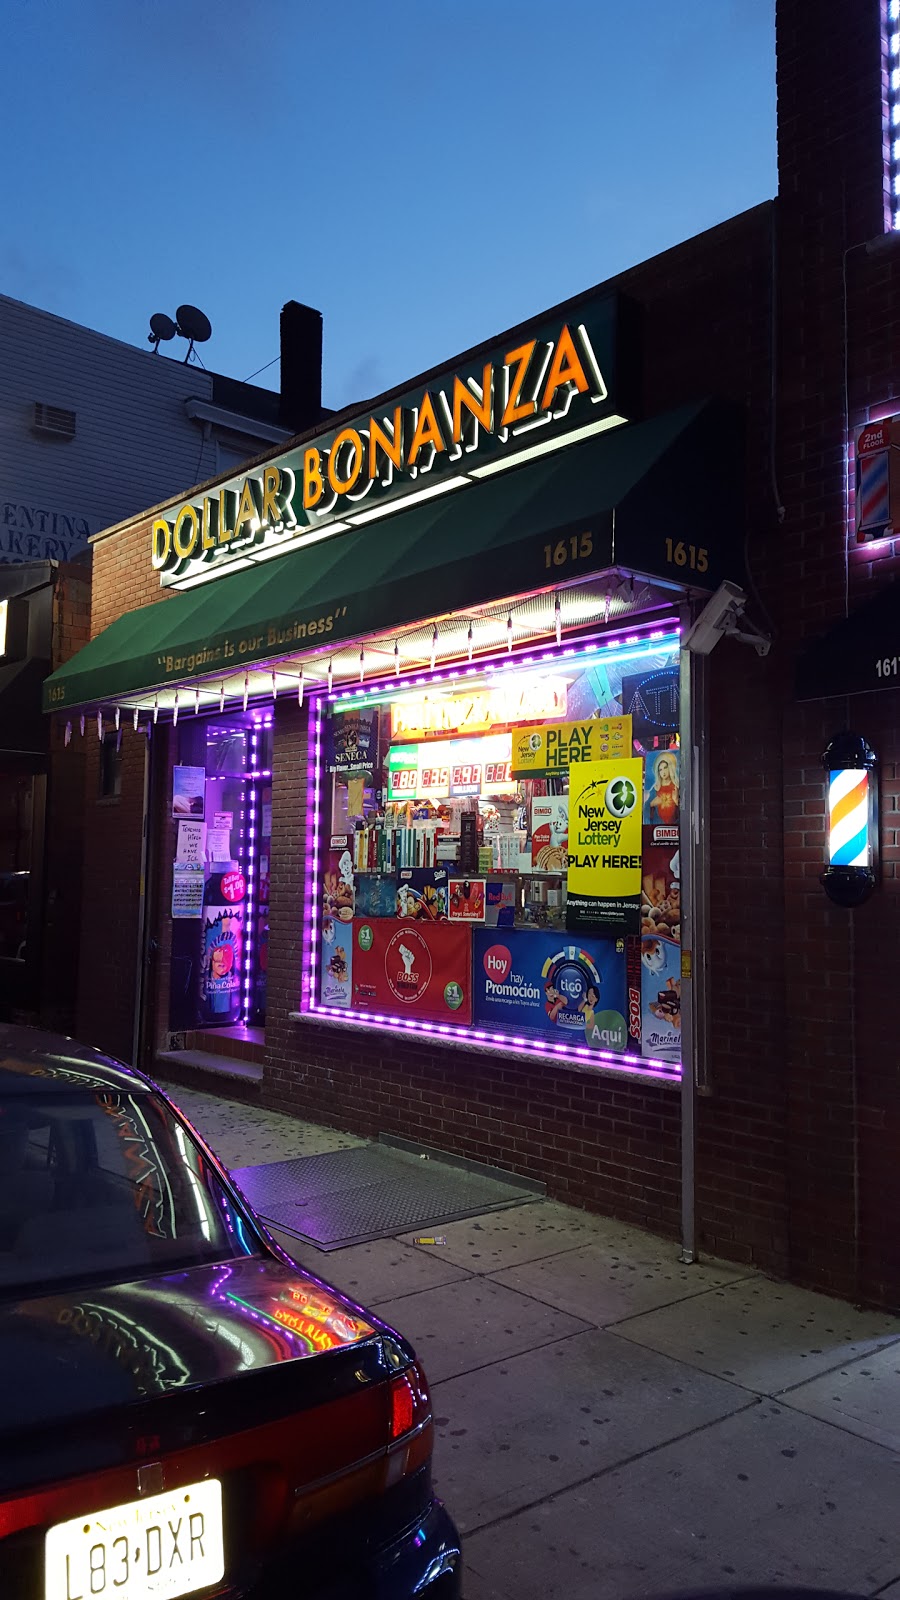 Photo of Dollar Bonanza Viva Corporation in Union City, New Jersey, United States - 3 Picture of Point of interest, Establishment, Store